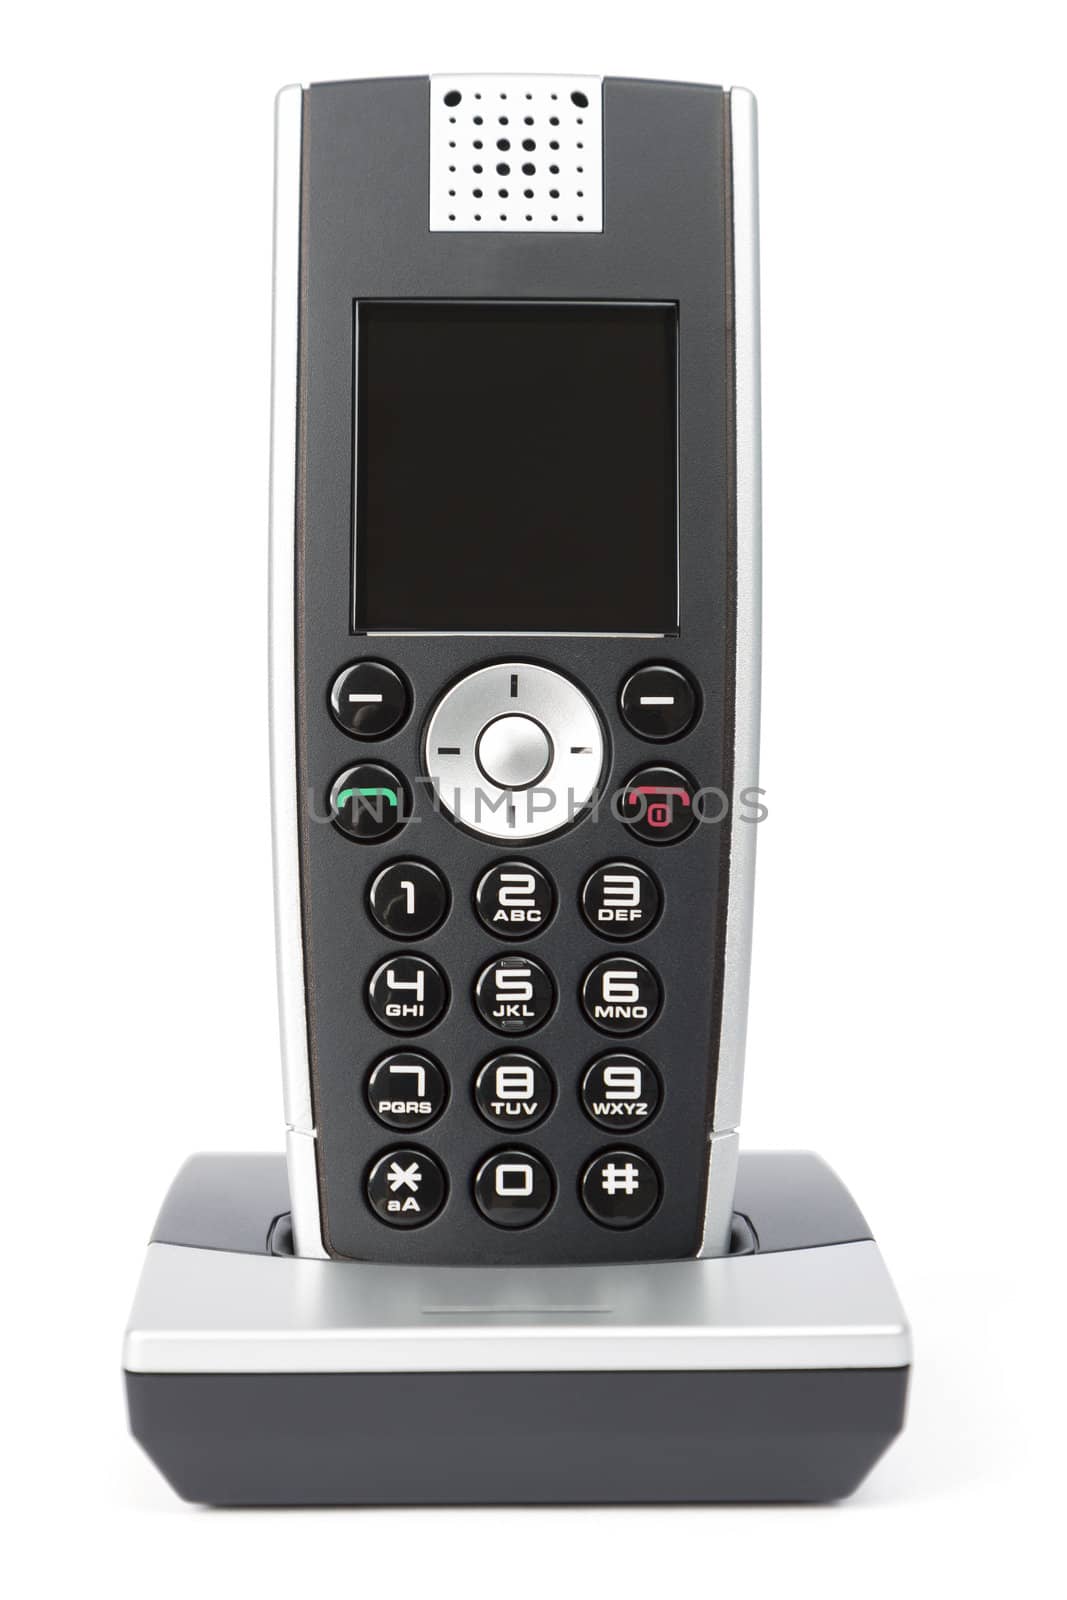 modern wireless telephone in white background by gewoldi